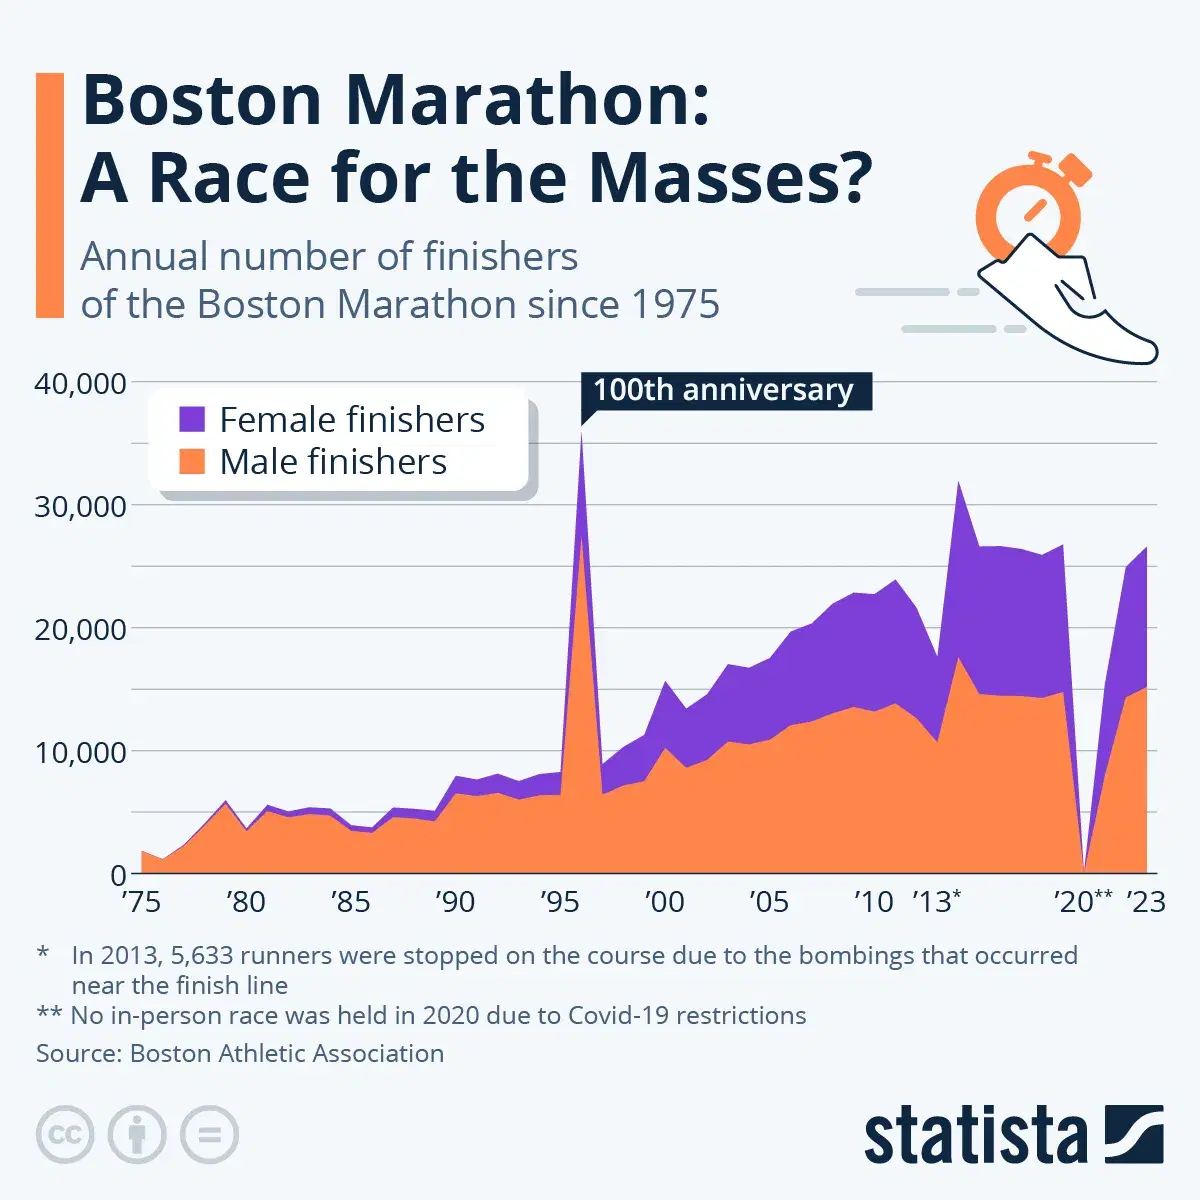 Boston Marathon: A Race for the Masses?